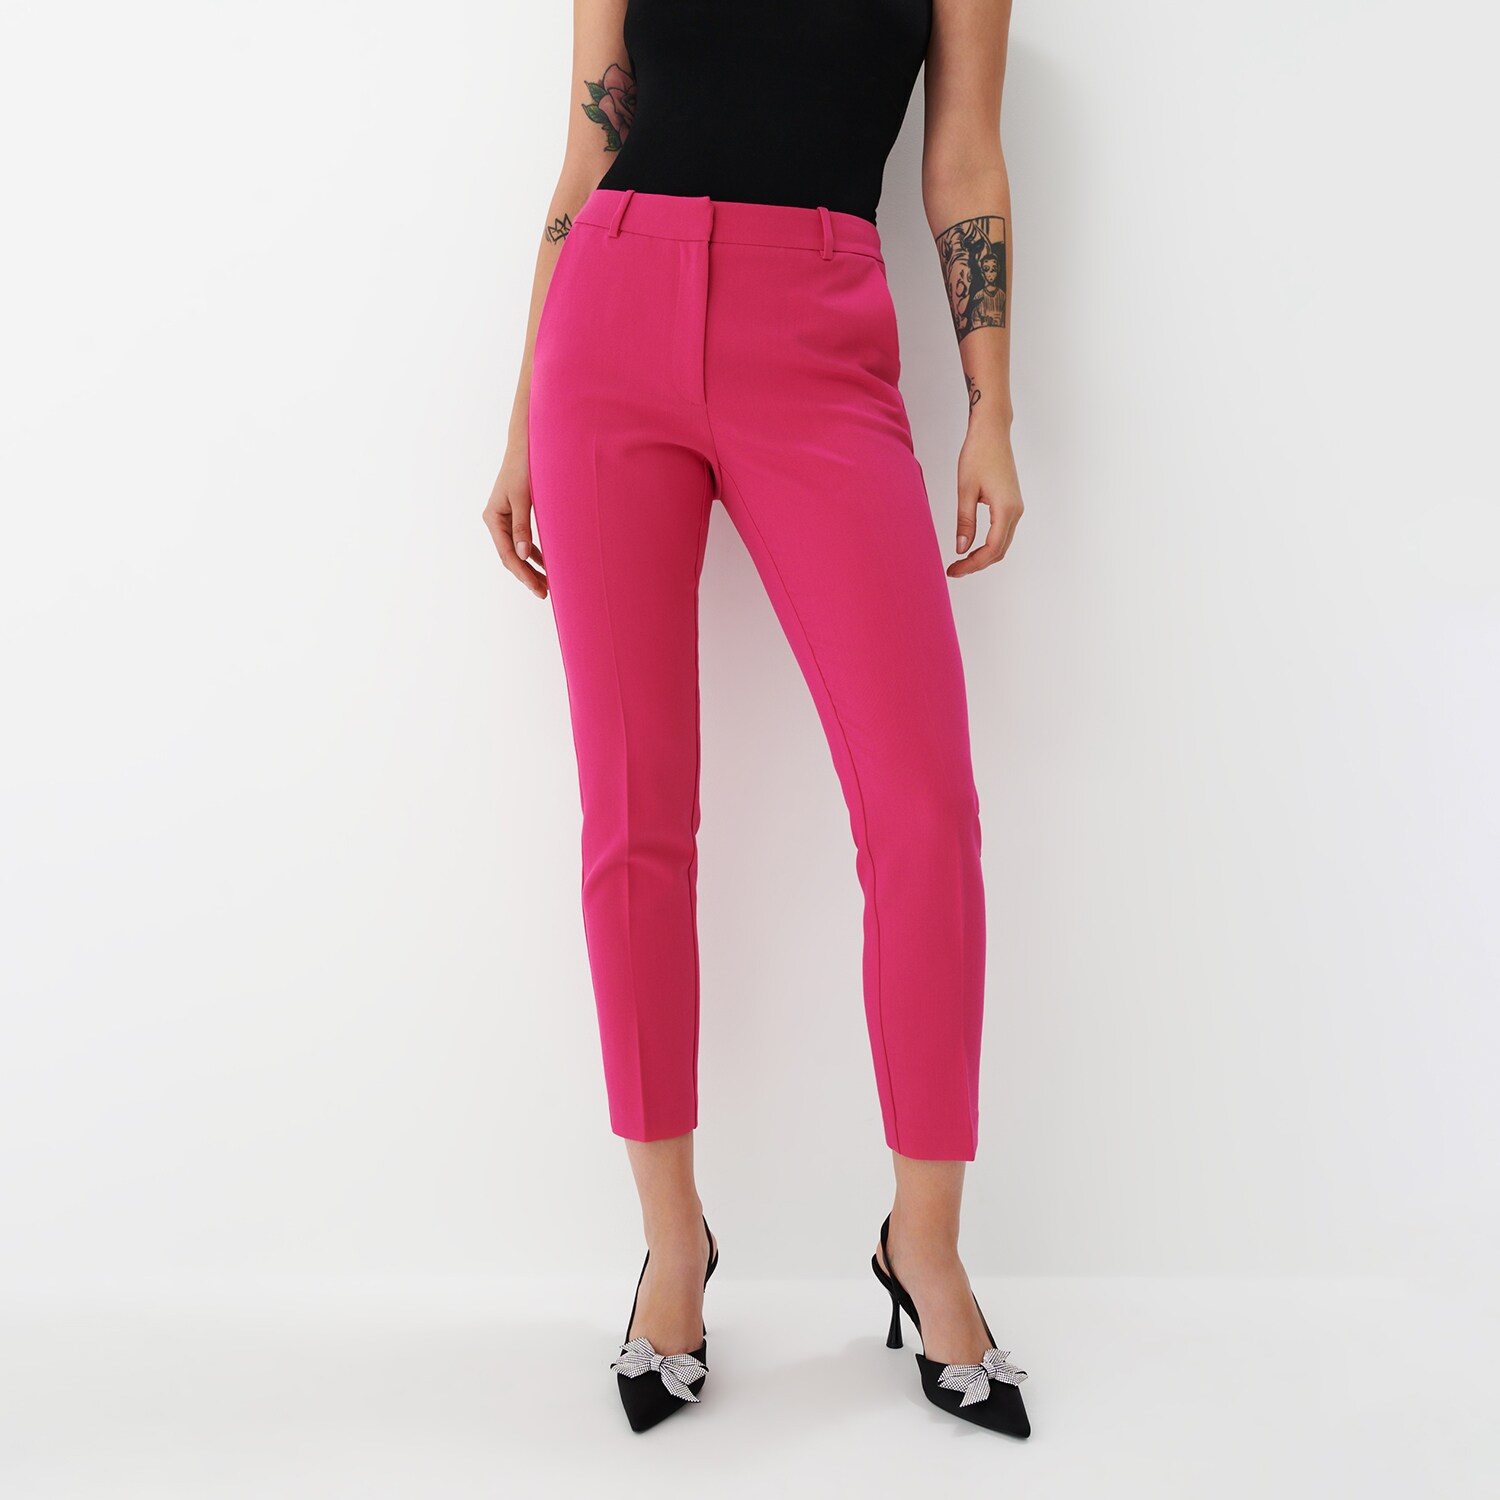 Mohito - Pantaloni tigareta roz - Roz image6